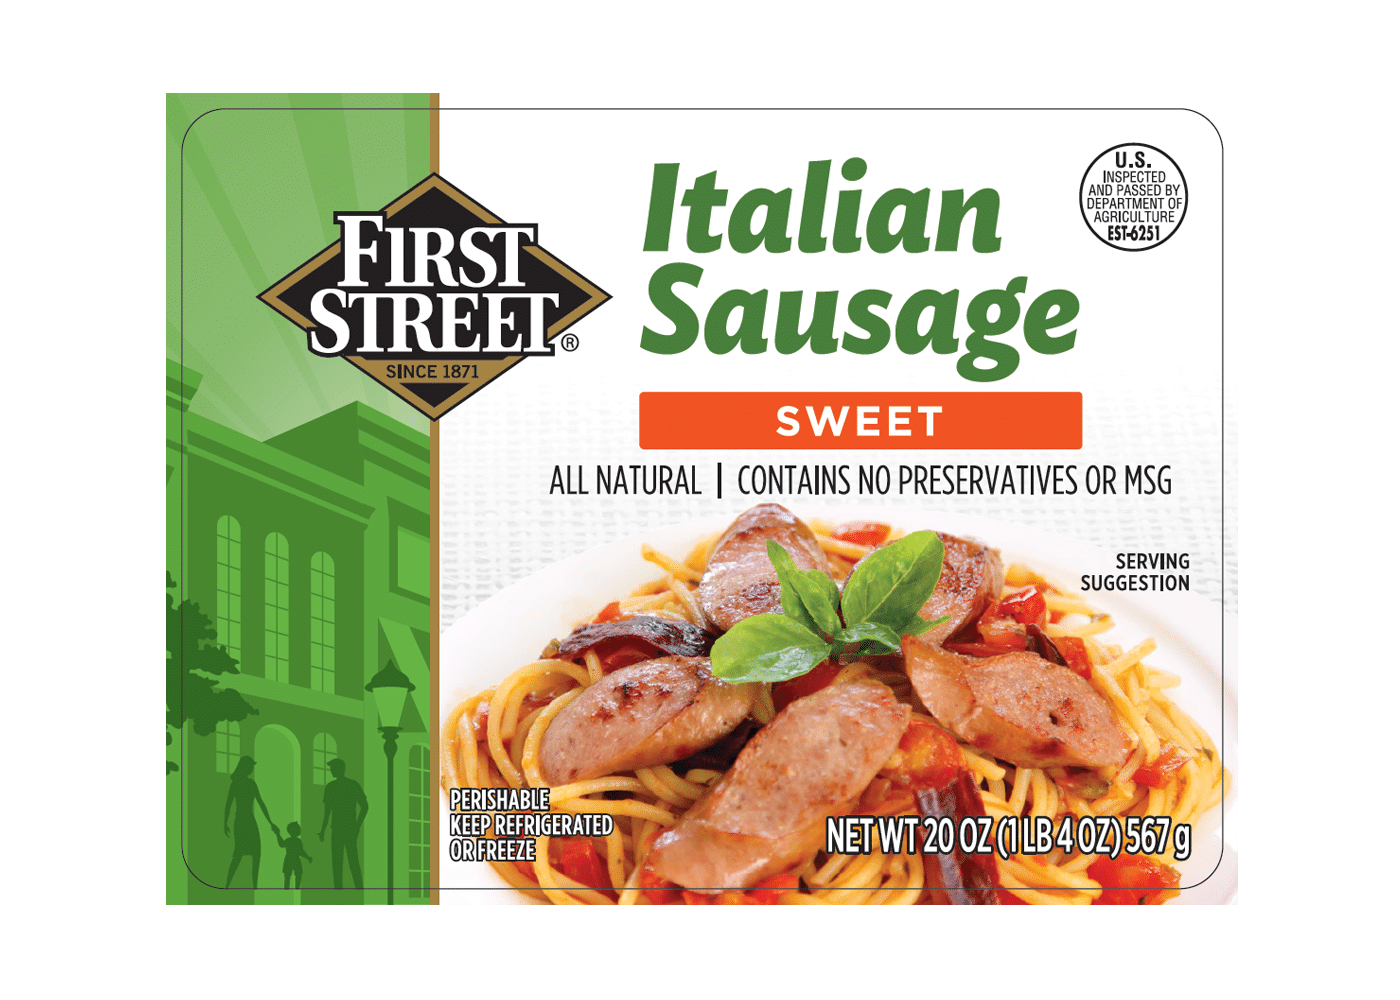 First Street Sweet Italian Sausage